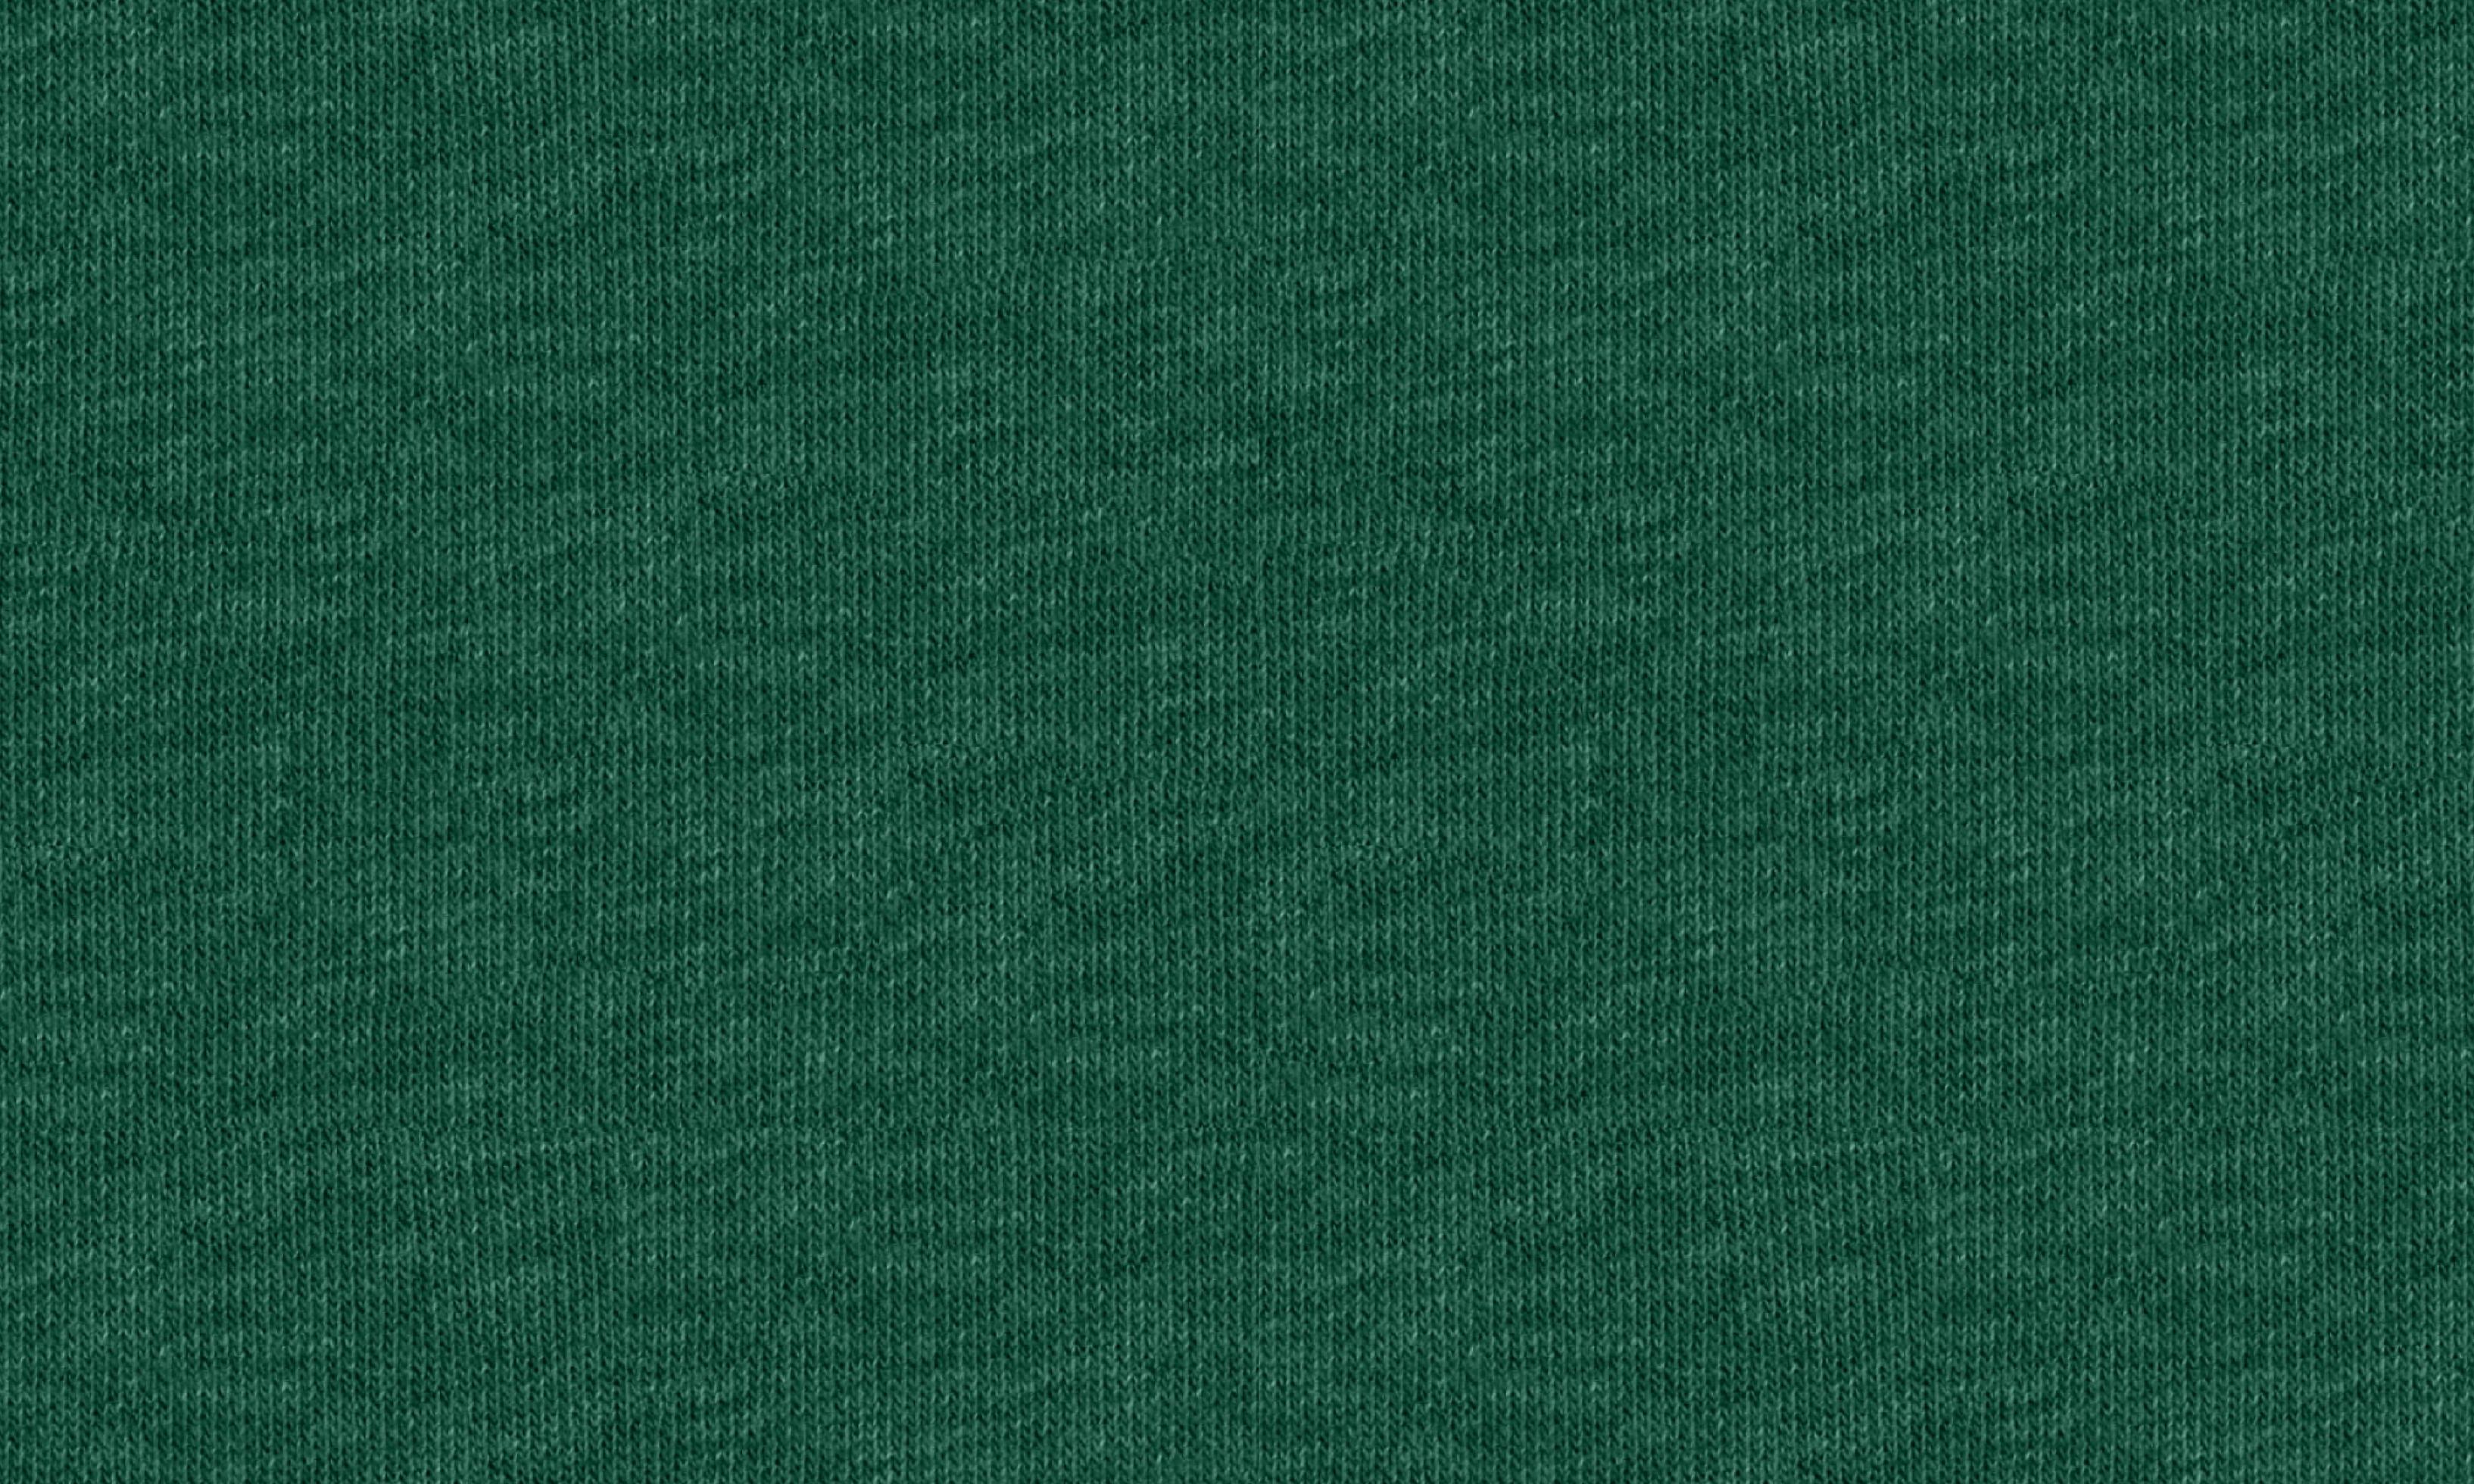 Top 176+ imagen green cloth texture background - Thcshoanghoatham ...